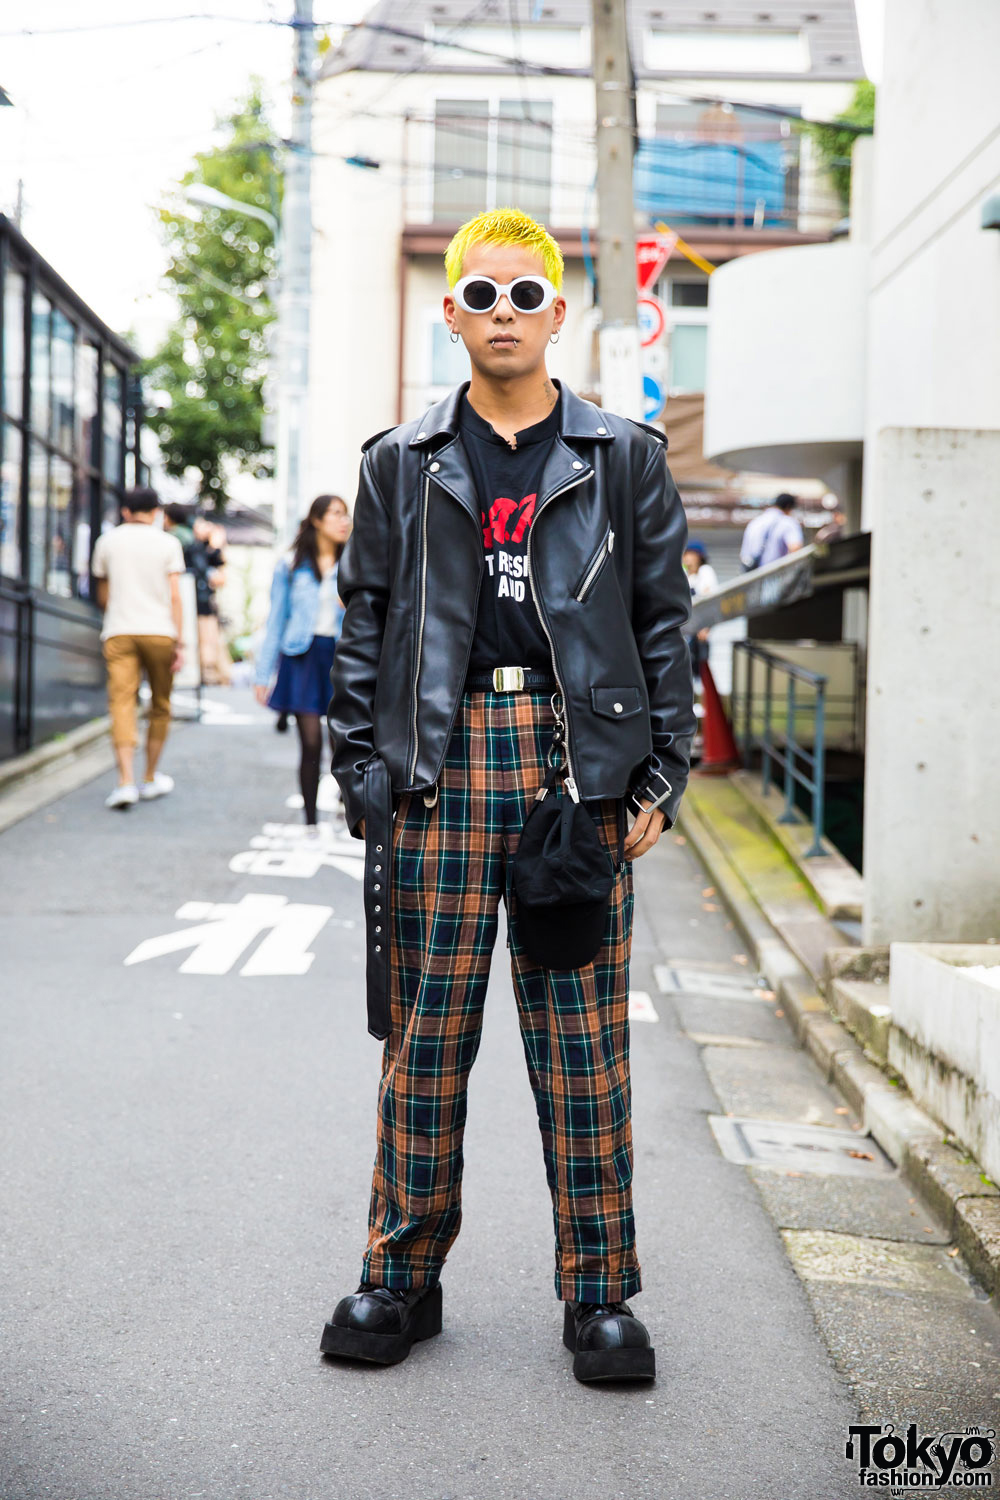 Harajuku Guy’s Punk Inspired Street Style w/ Yellow Hair, Biker Jacket